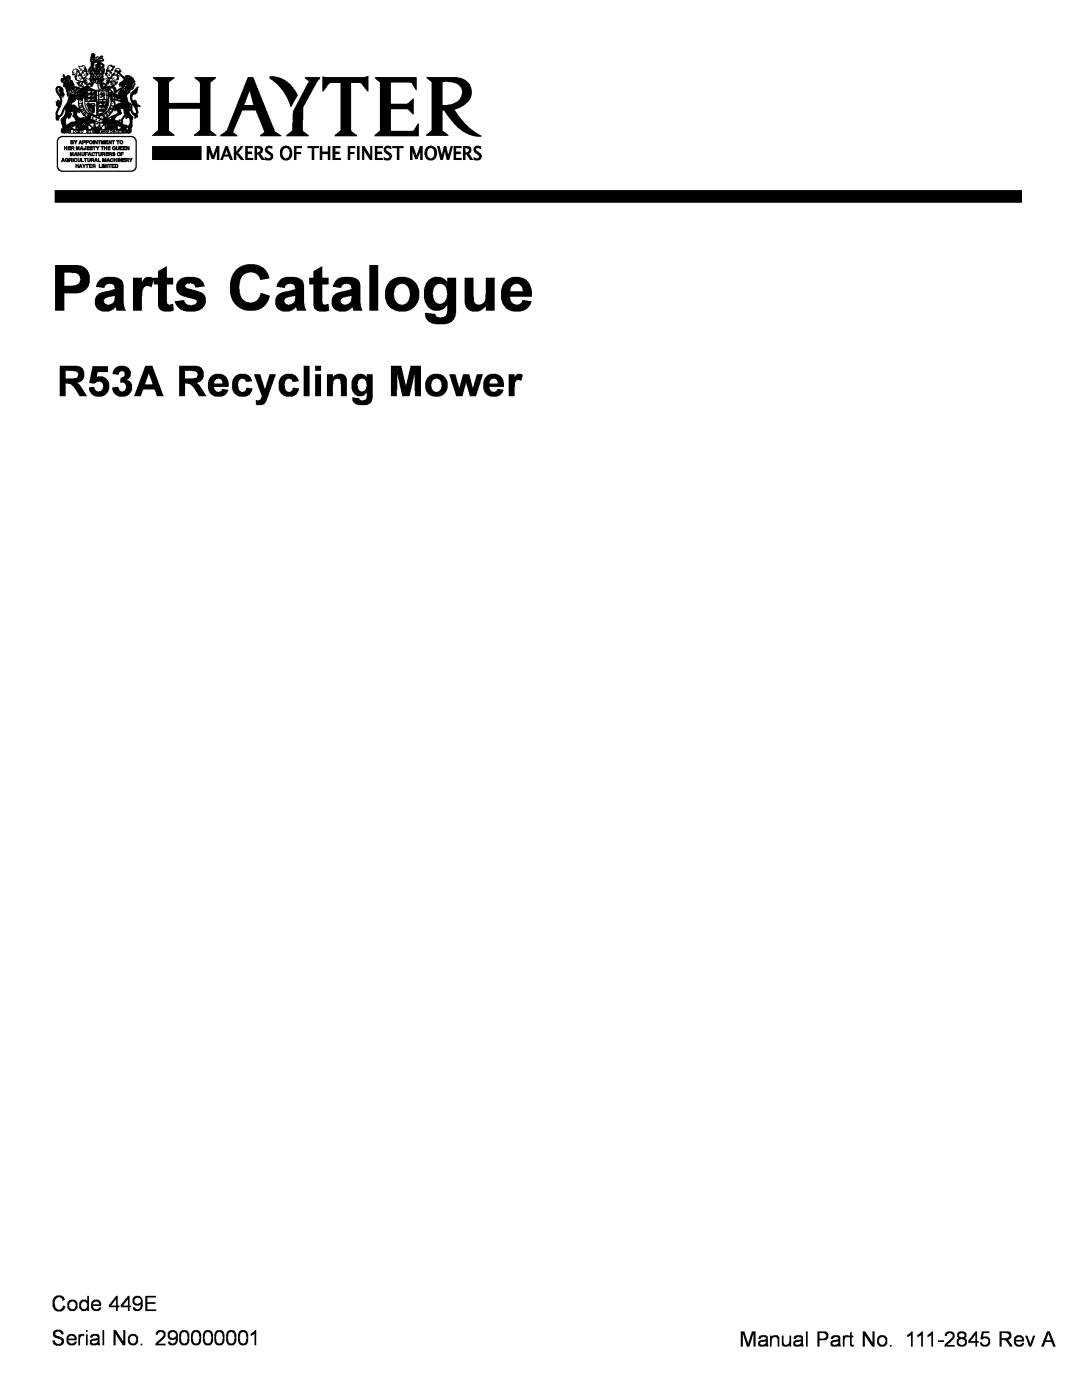 Hayter Mowers manual Parts Catalogue, R53A Recycling Mower, Code 449E, Serial No, Manual Part No. 111-2845Rev A 